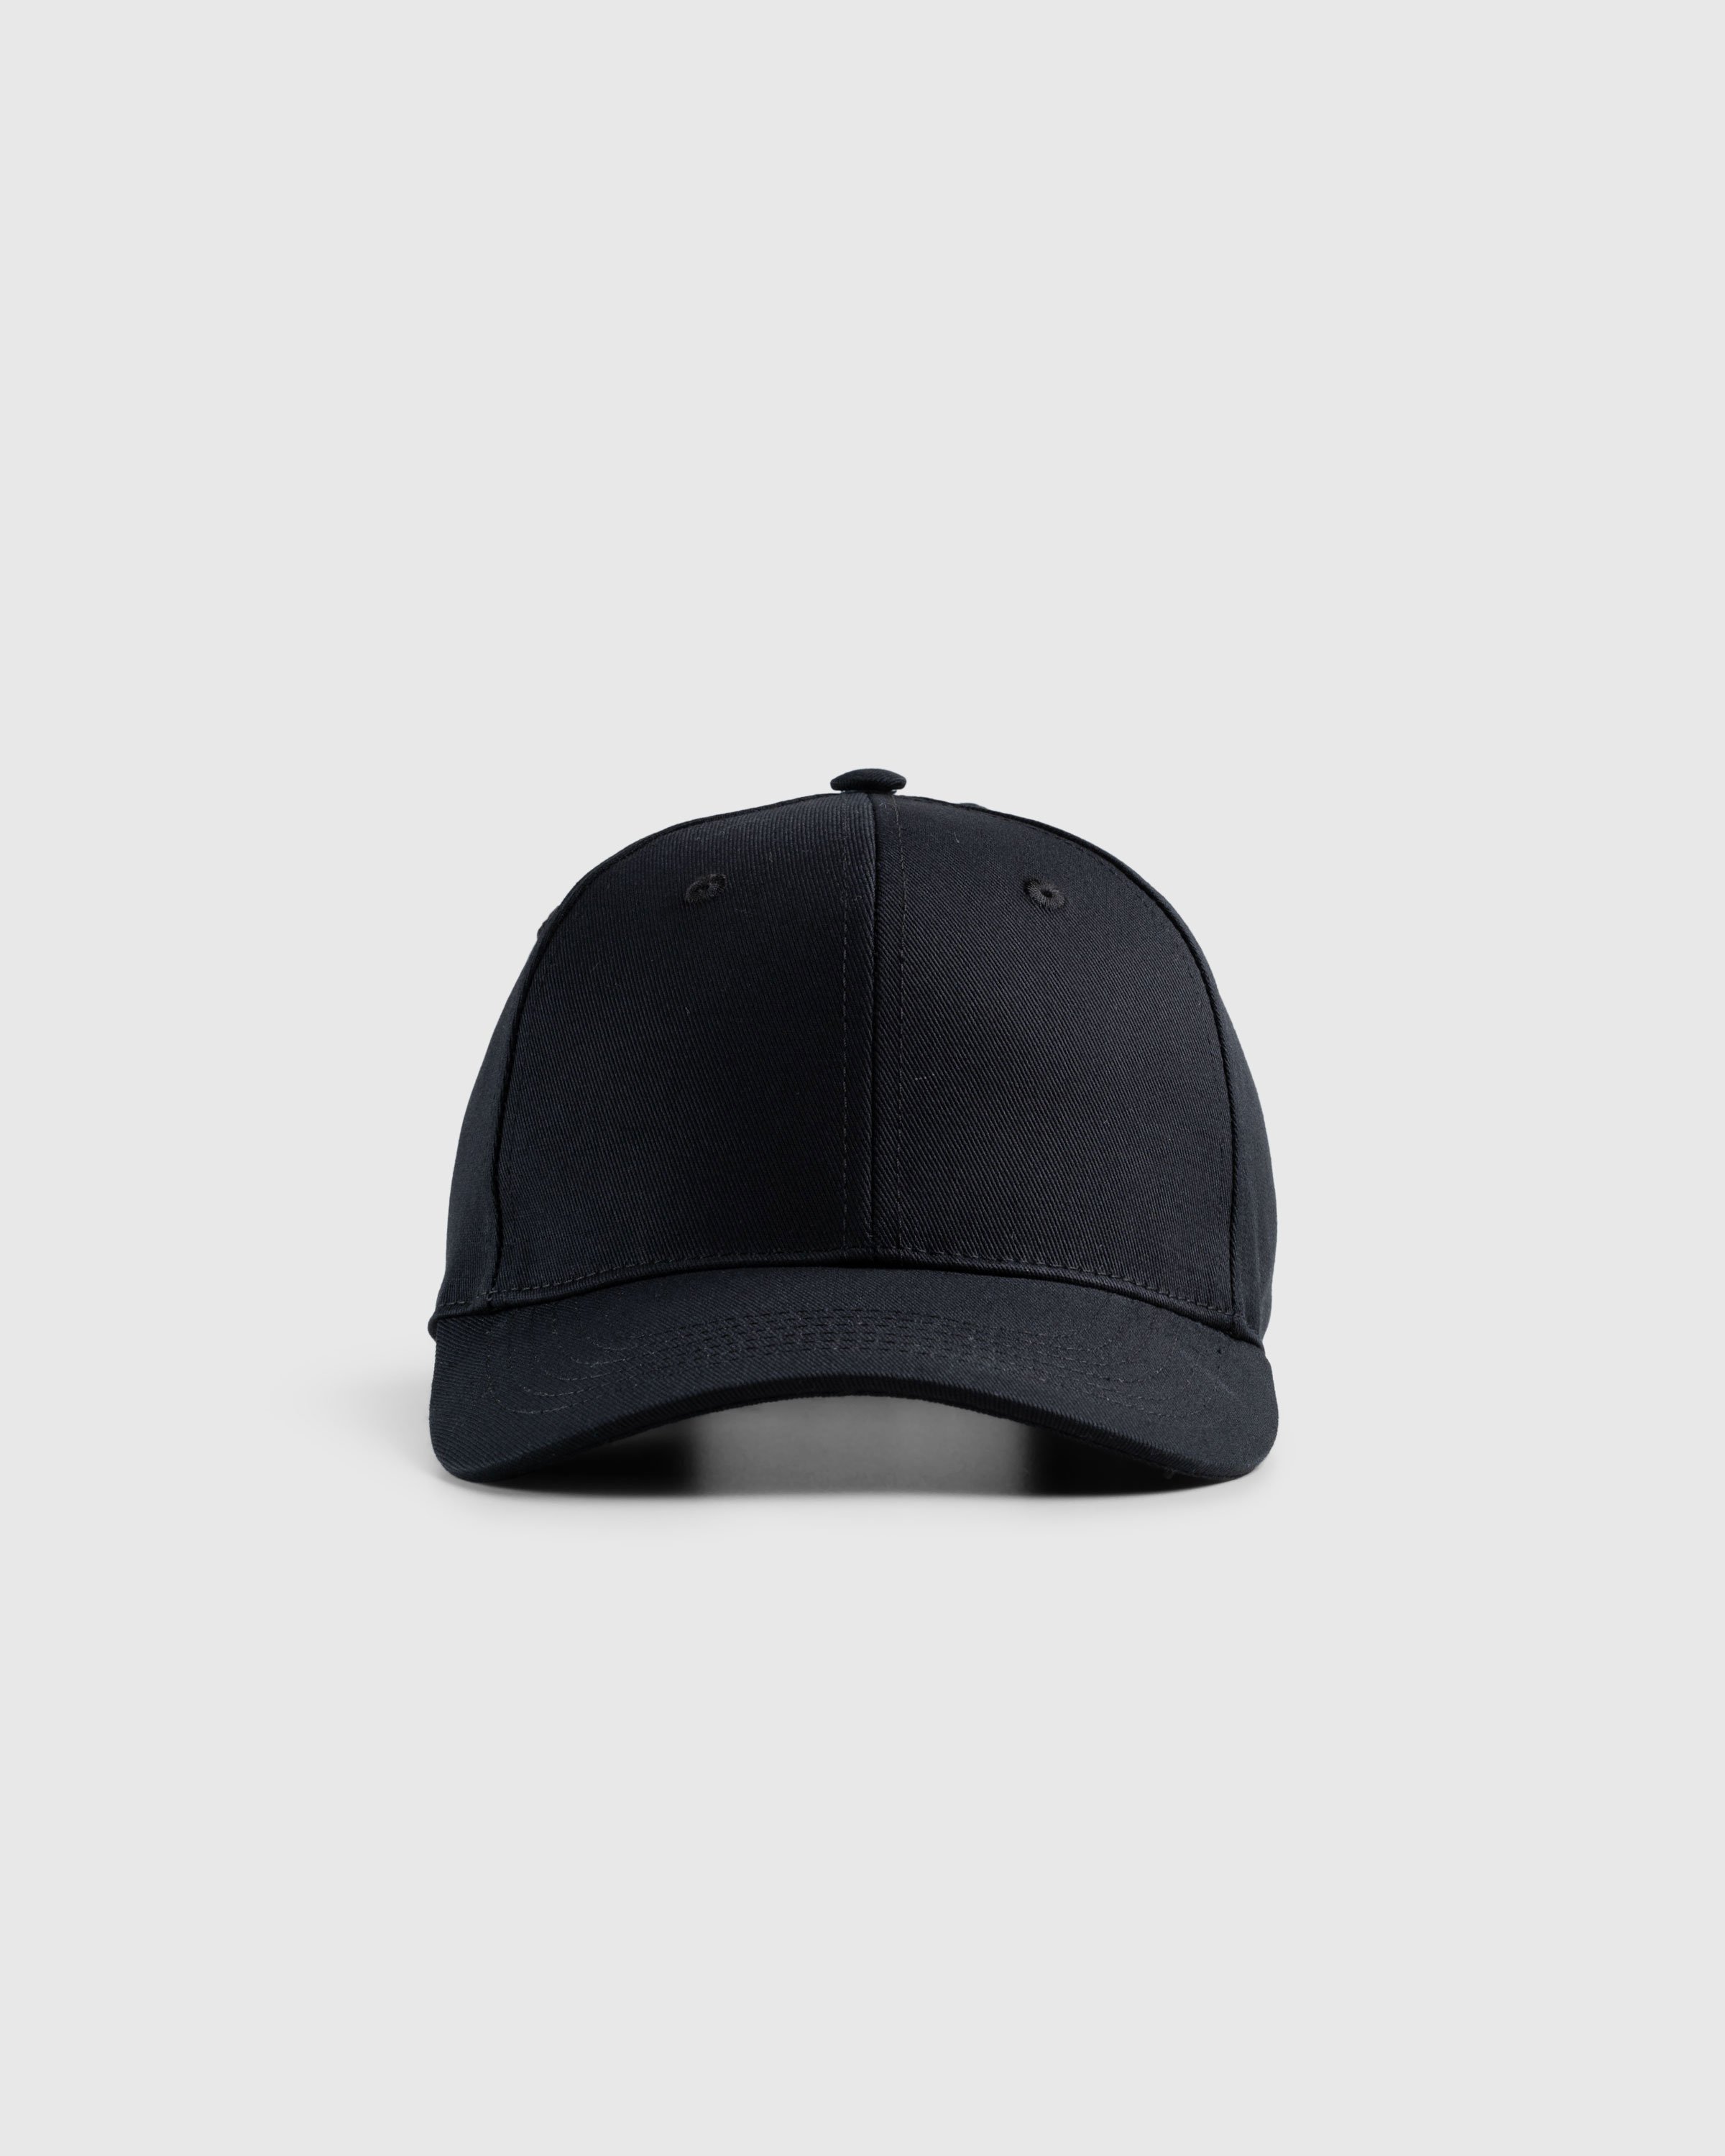 Meta Campania Collective - Spike Baseball Hat Black - Accessories - Black - Image 2